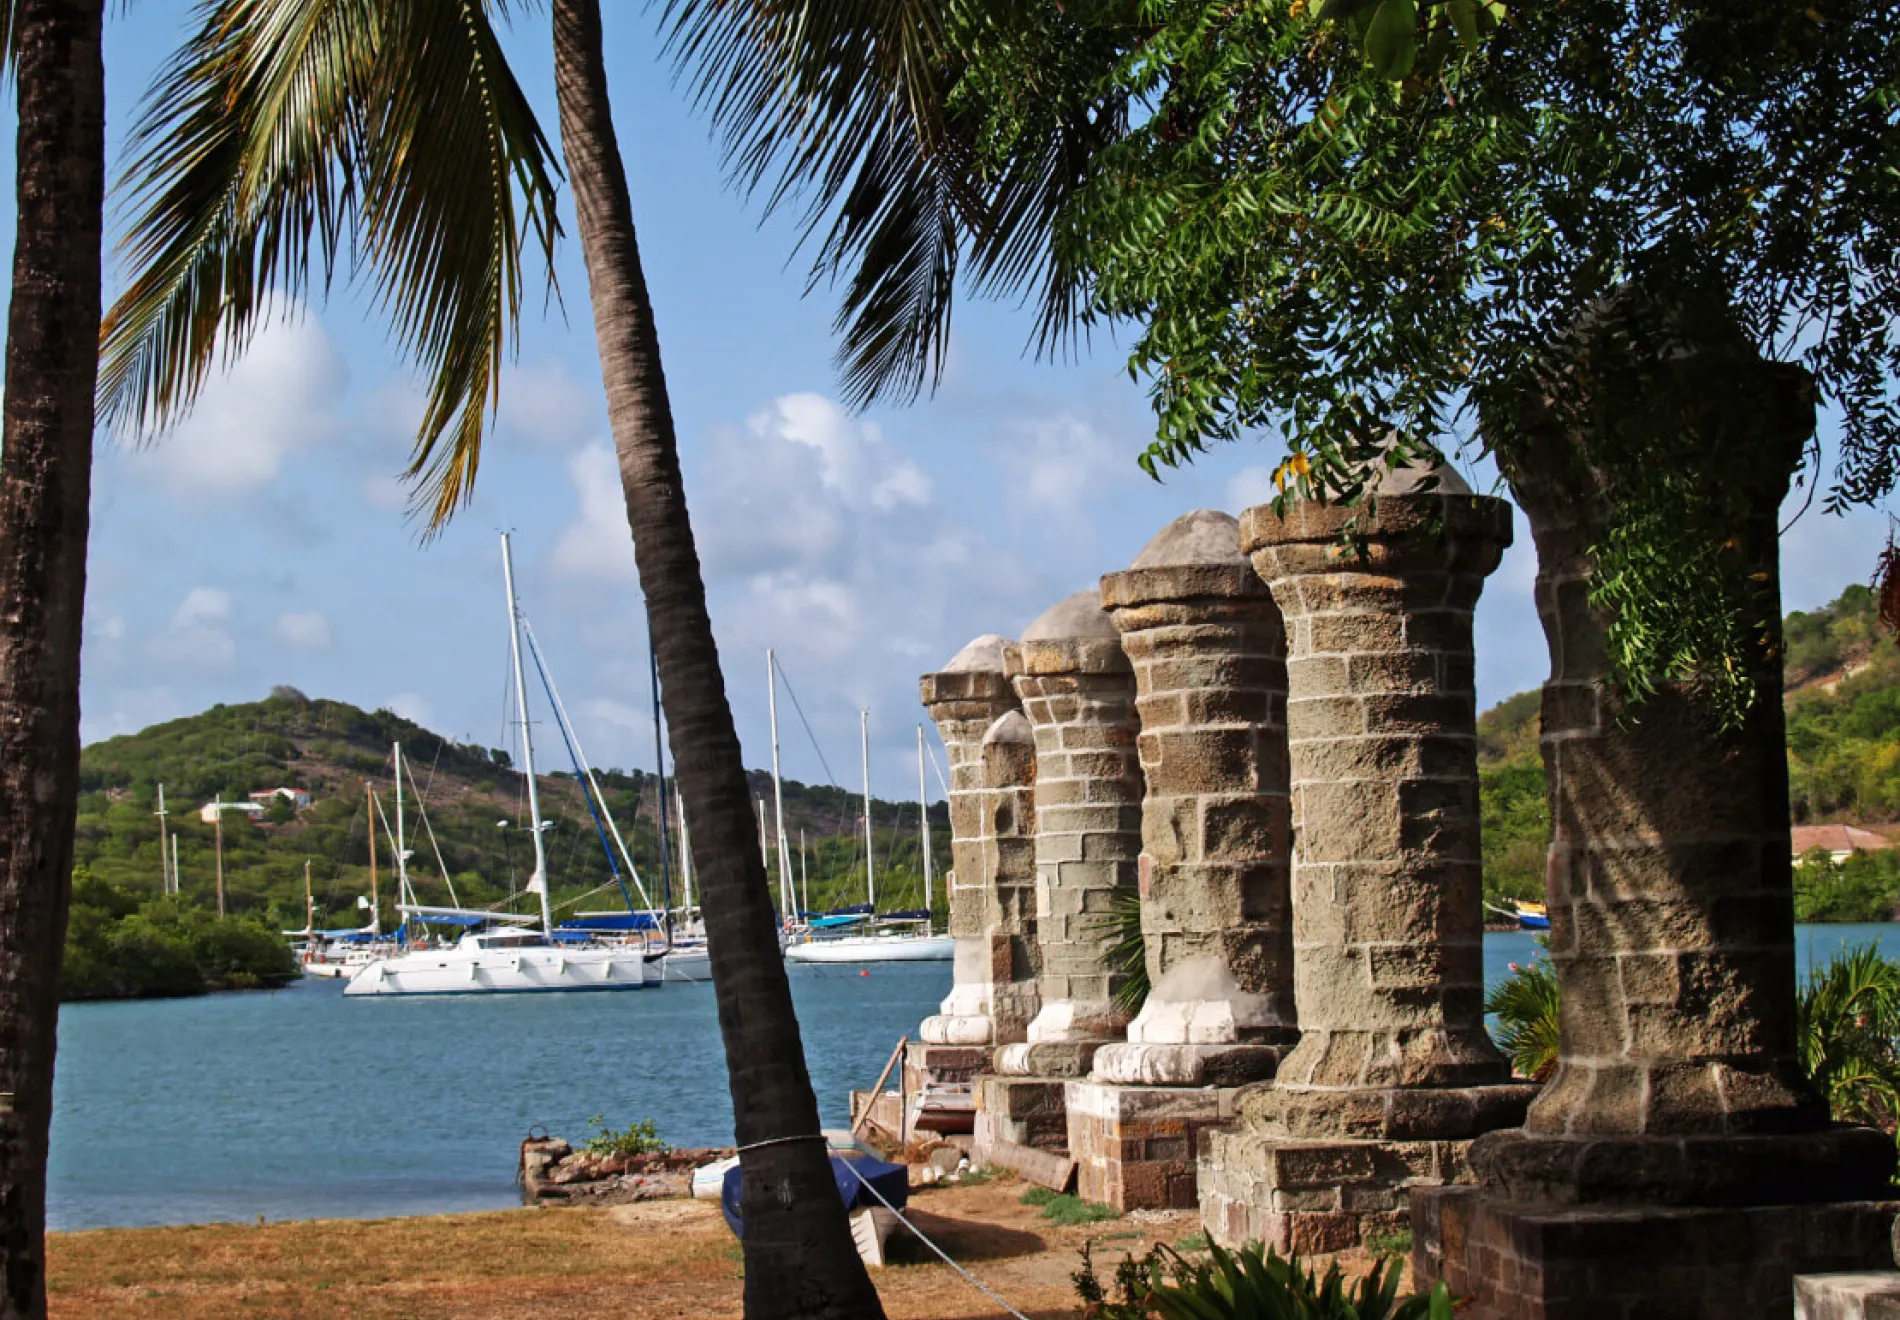 Old sail loft pillars in English Harbour inside Nelsons Dockyard National Park, on Antigua Barbuda